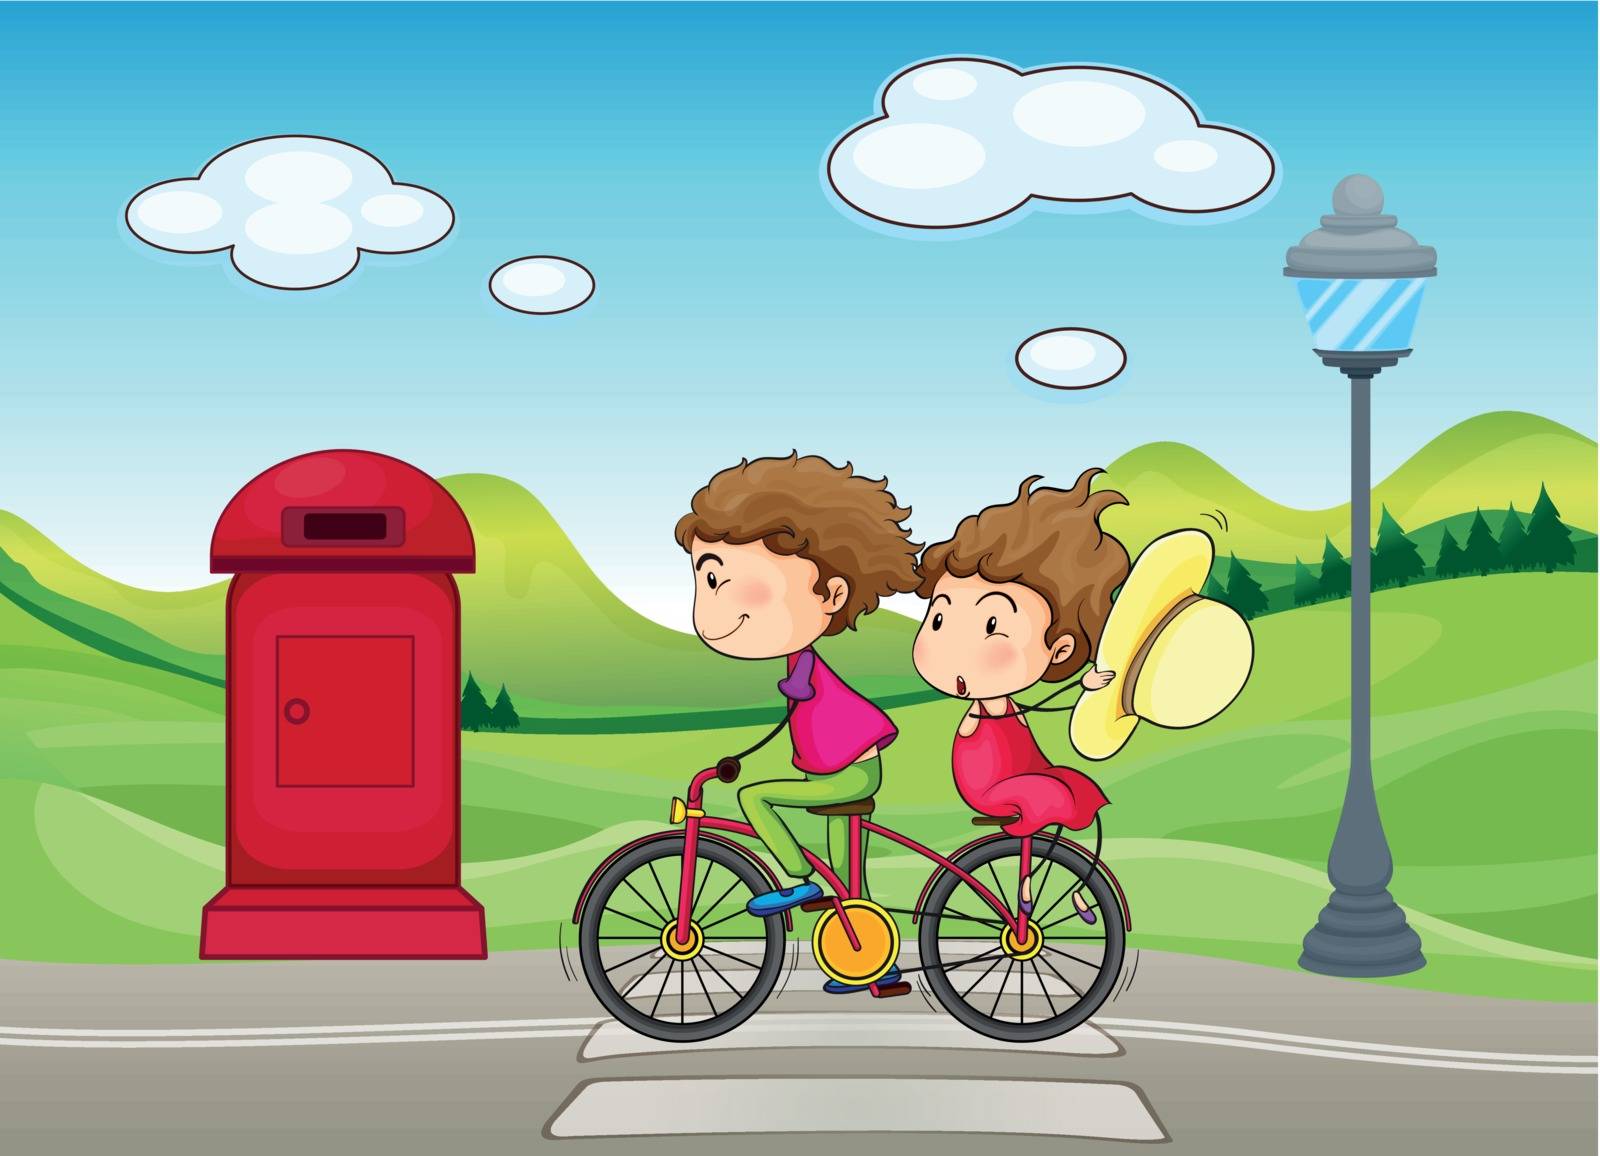 Illustration of a boy and a girl biking